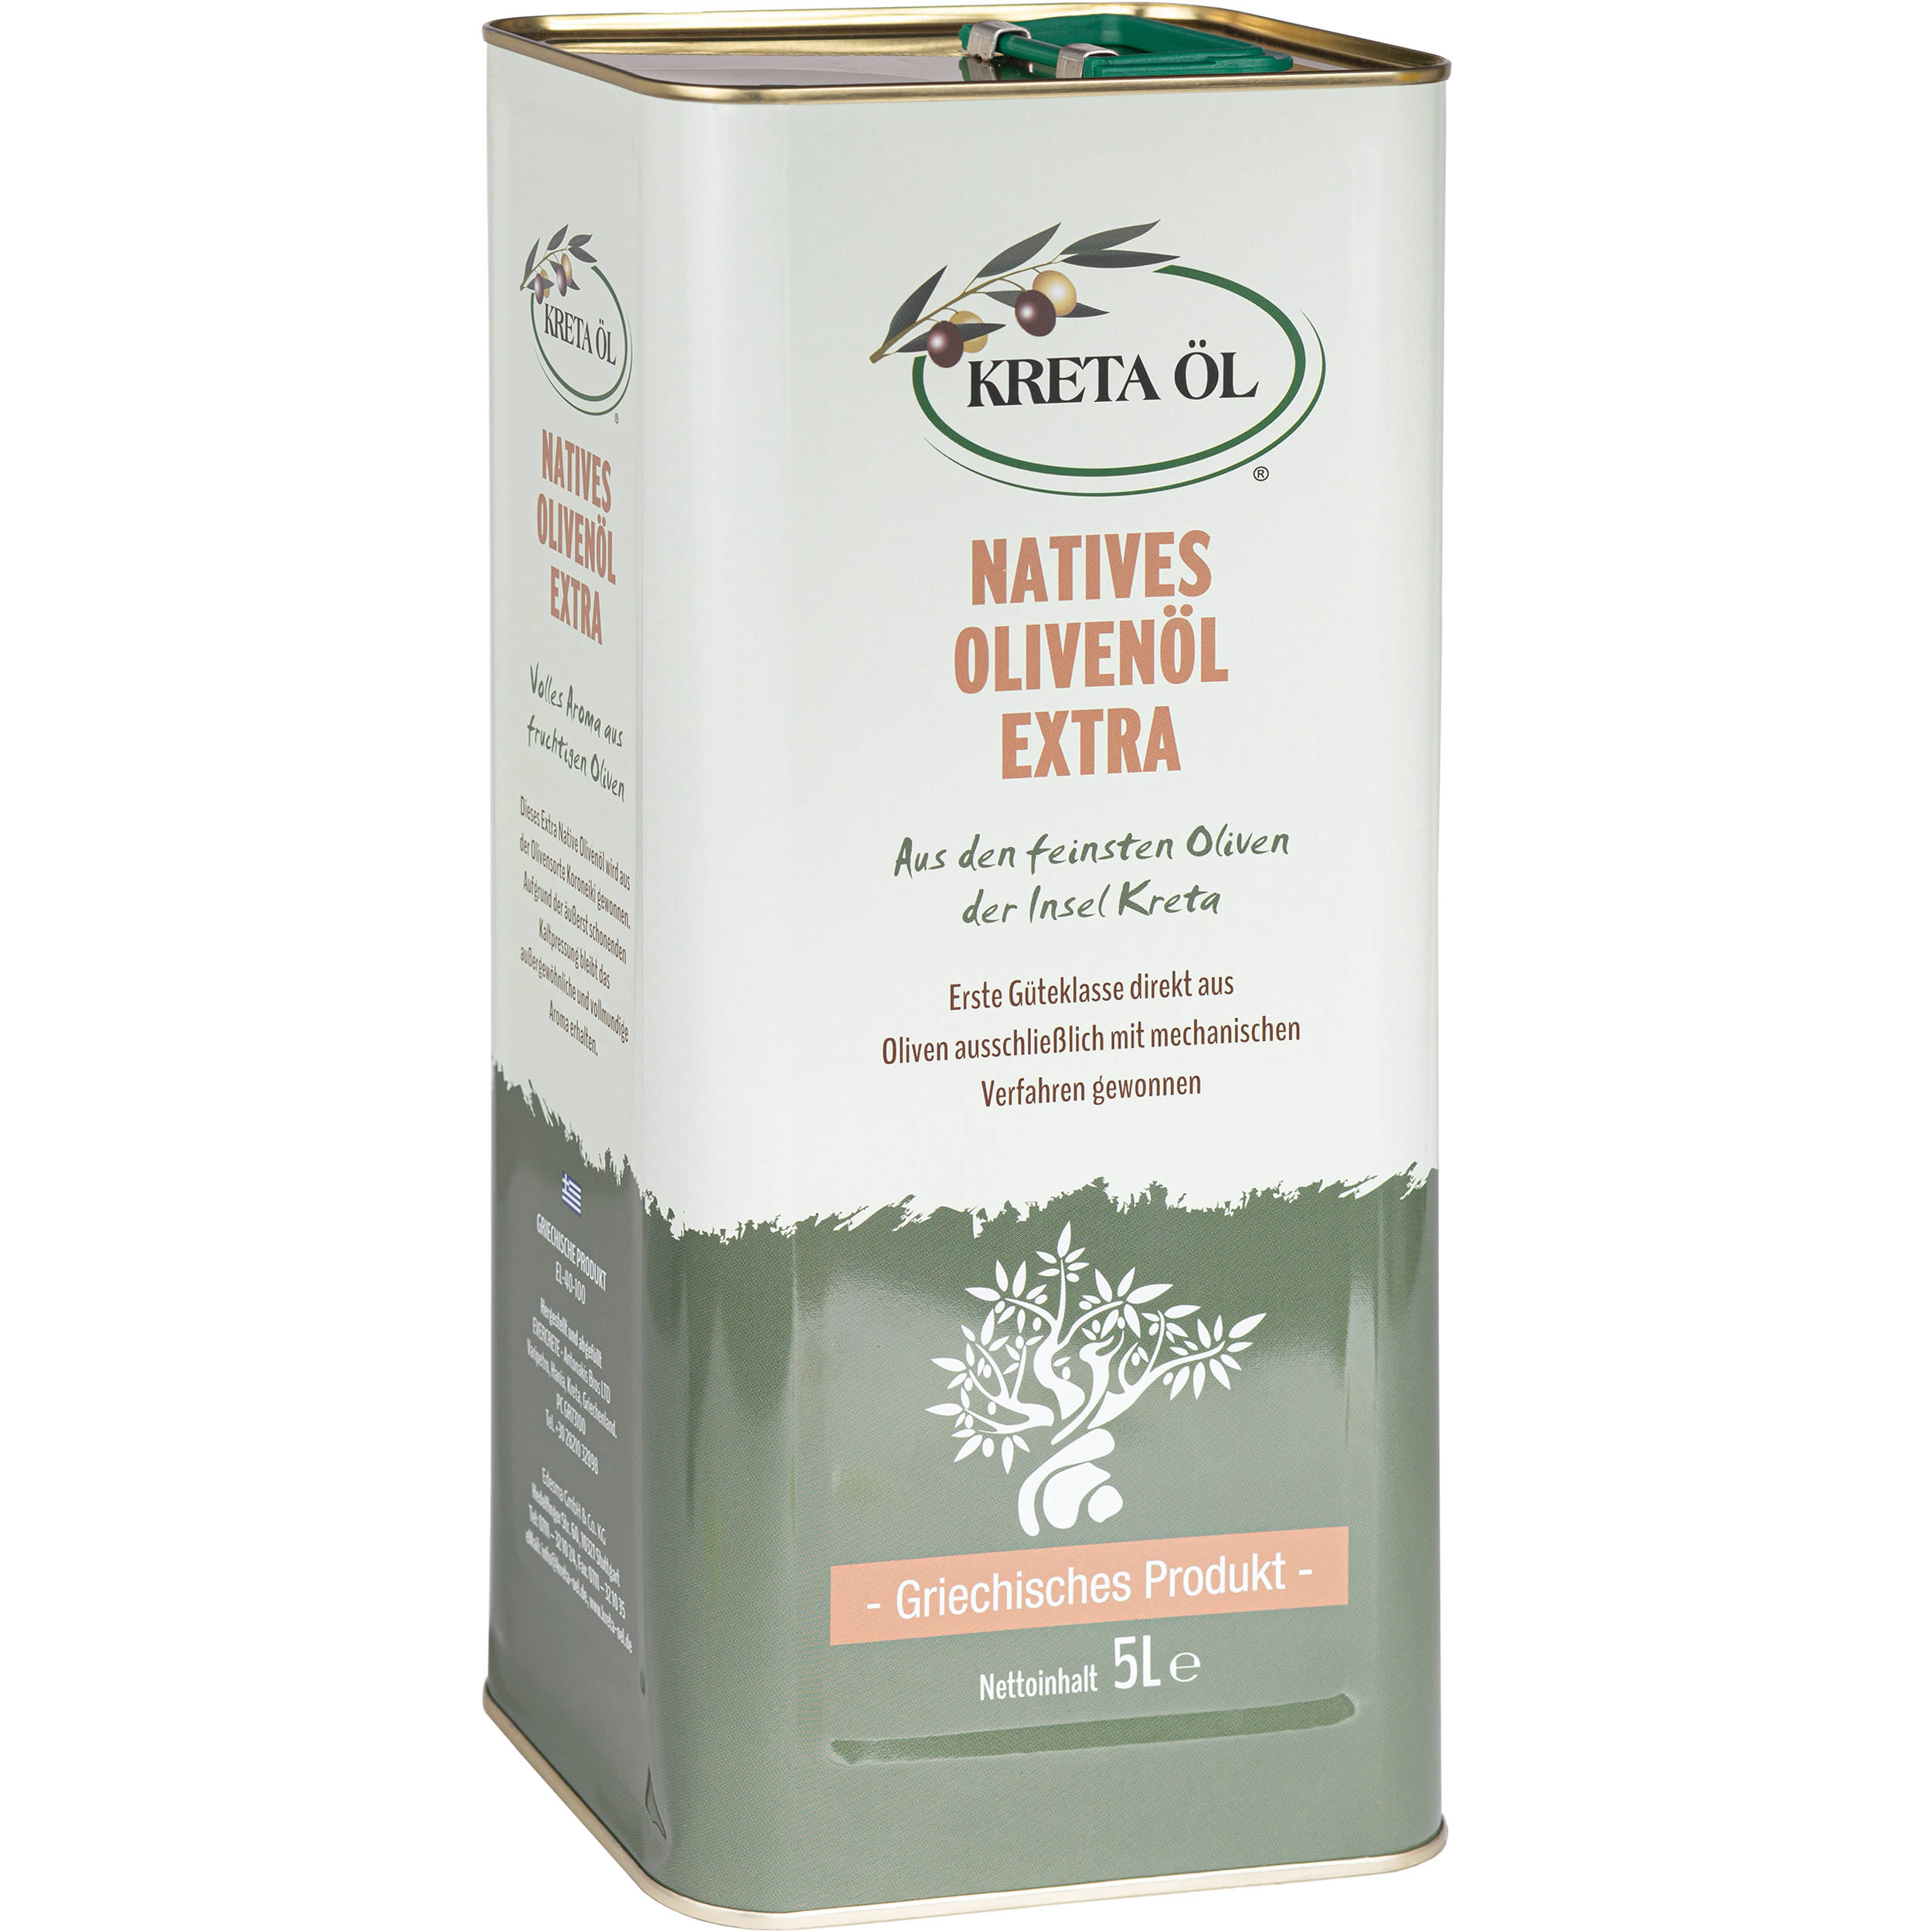 Kreta Öl ® - Extra natives Olivenöl max. 0.6 % Säuregehalt 5 l